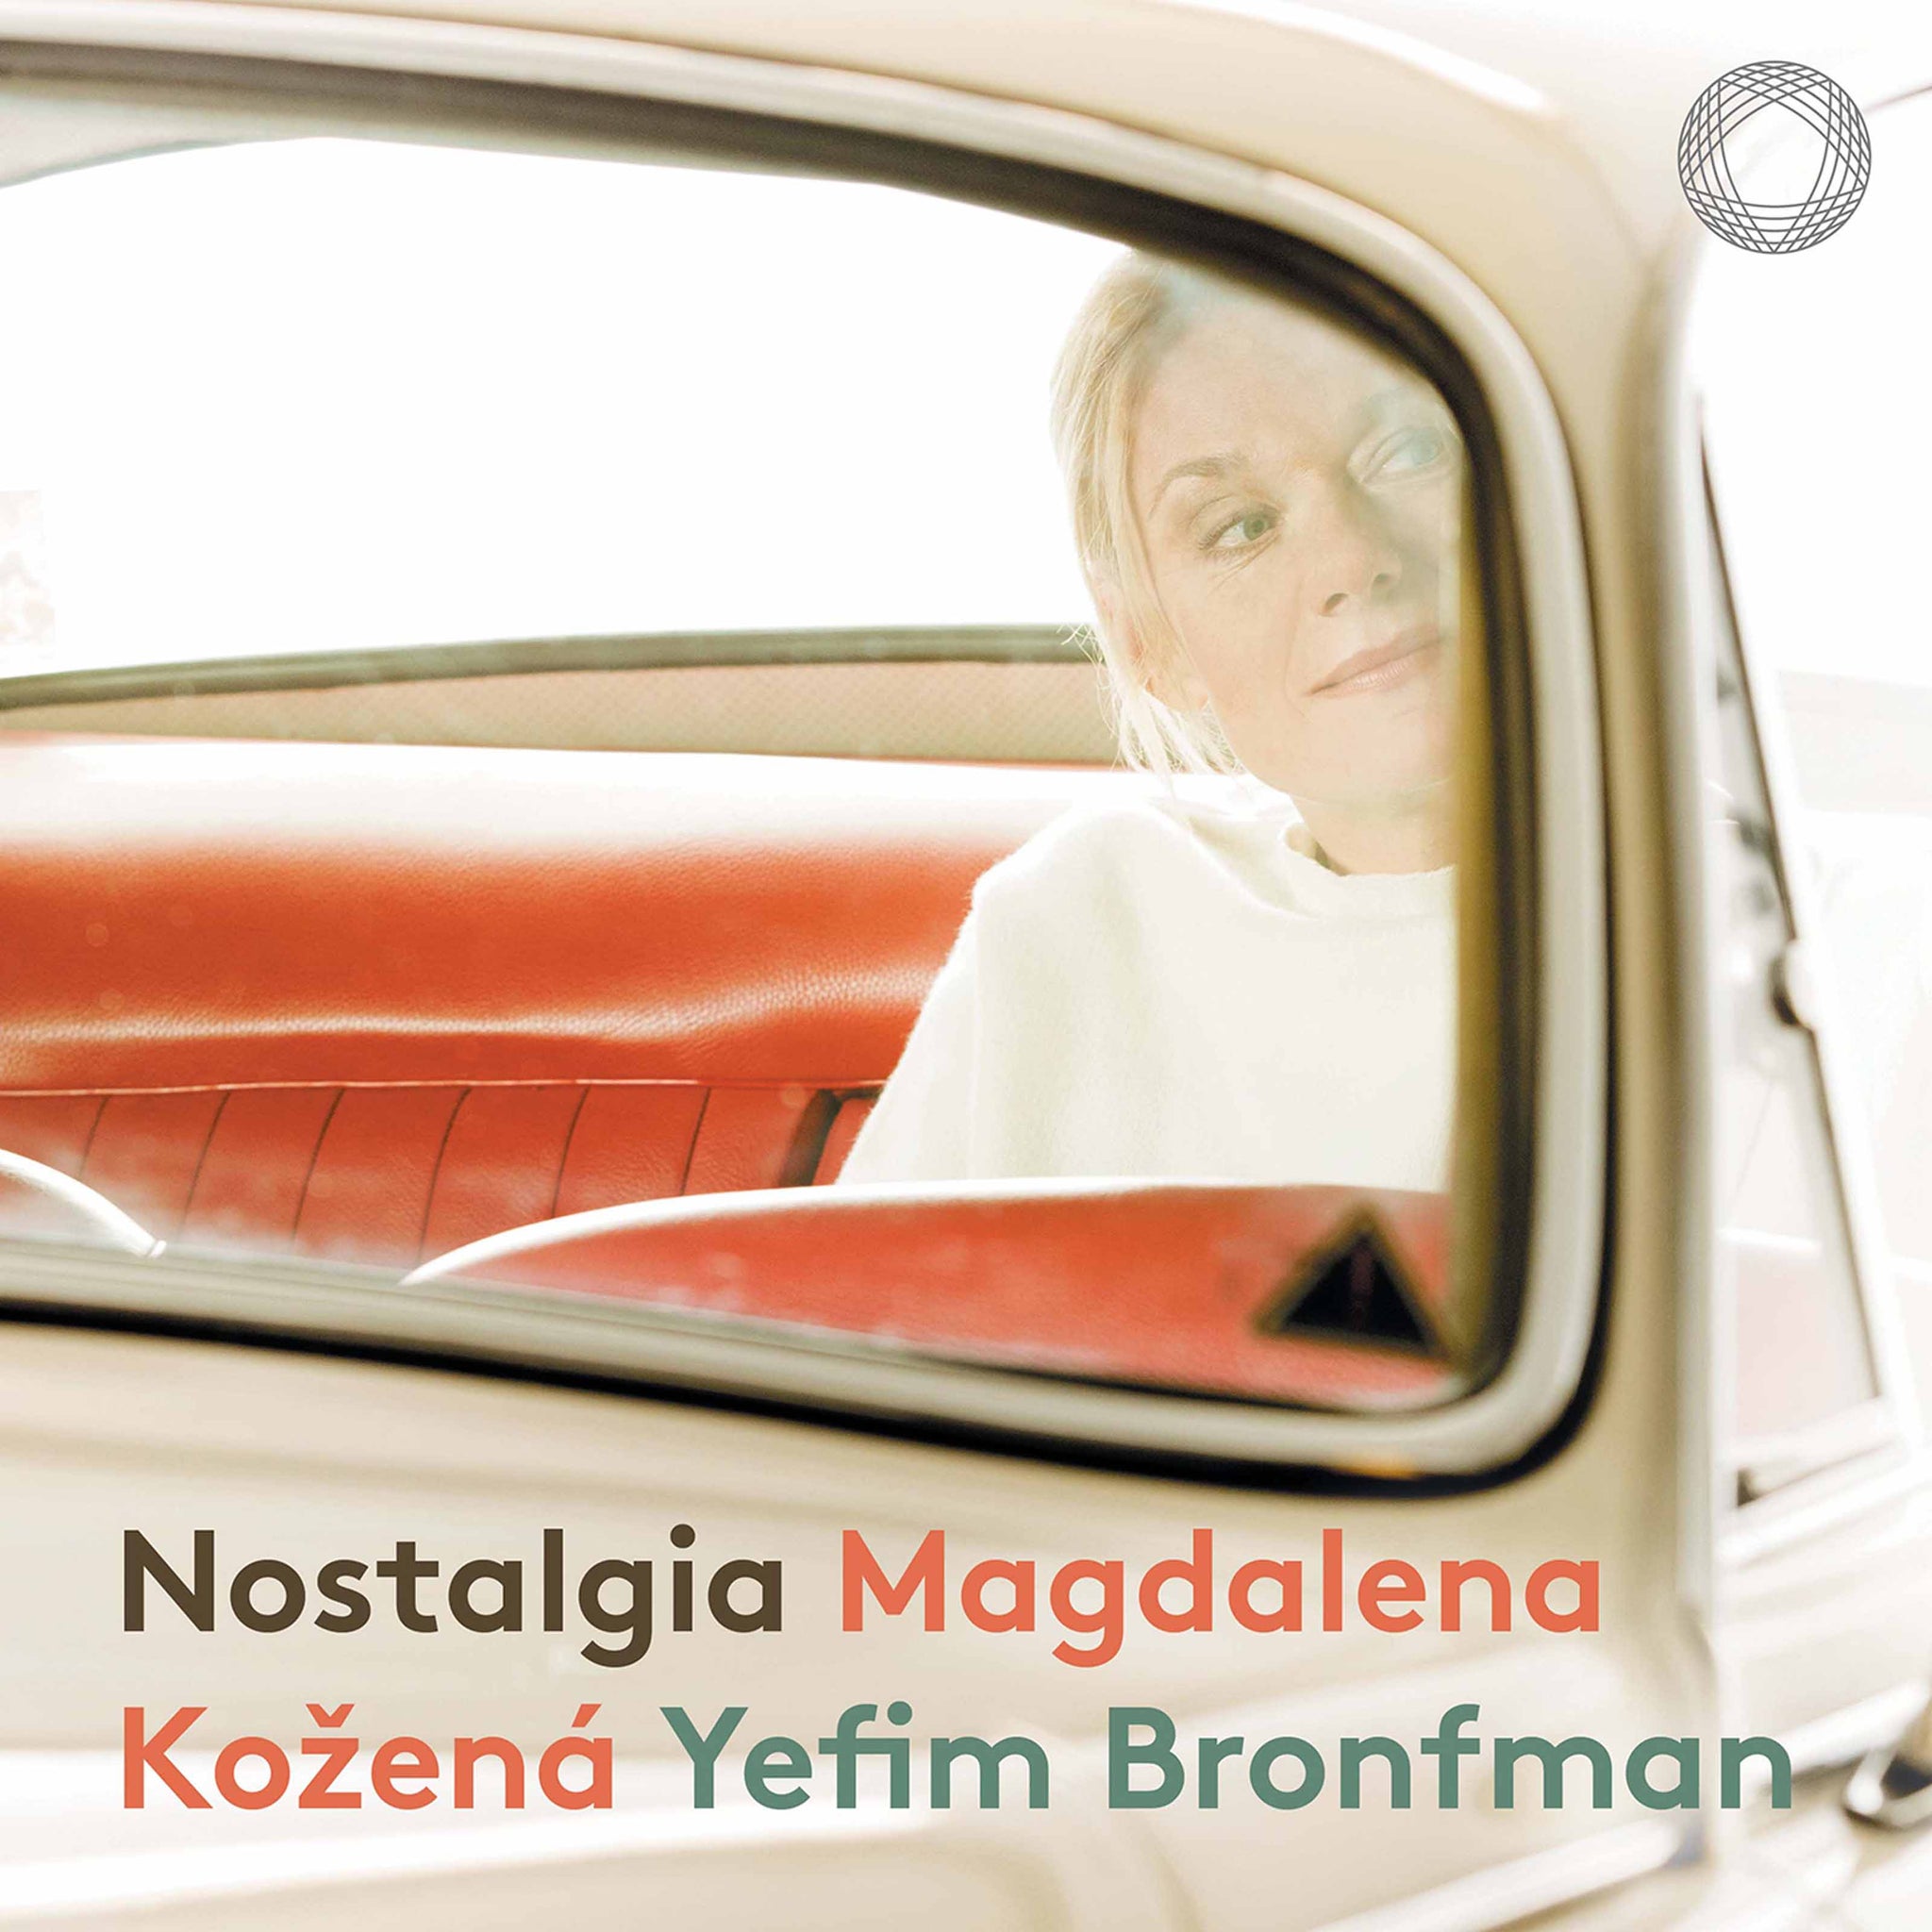 Nostalgia / Magdalena Kožená, Yefim Bronfman